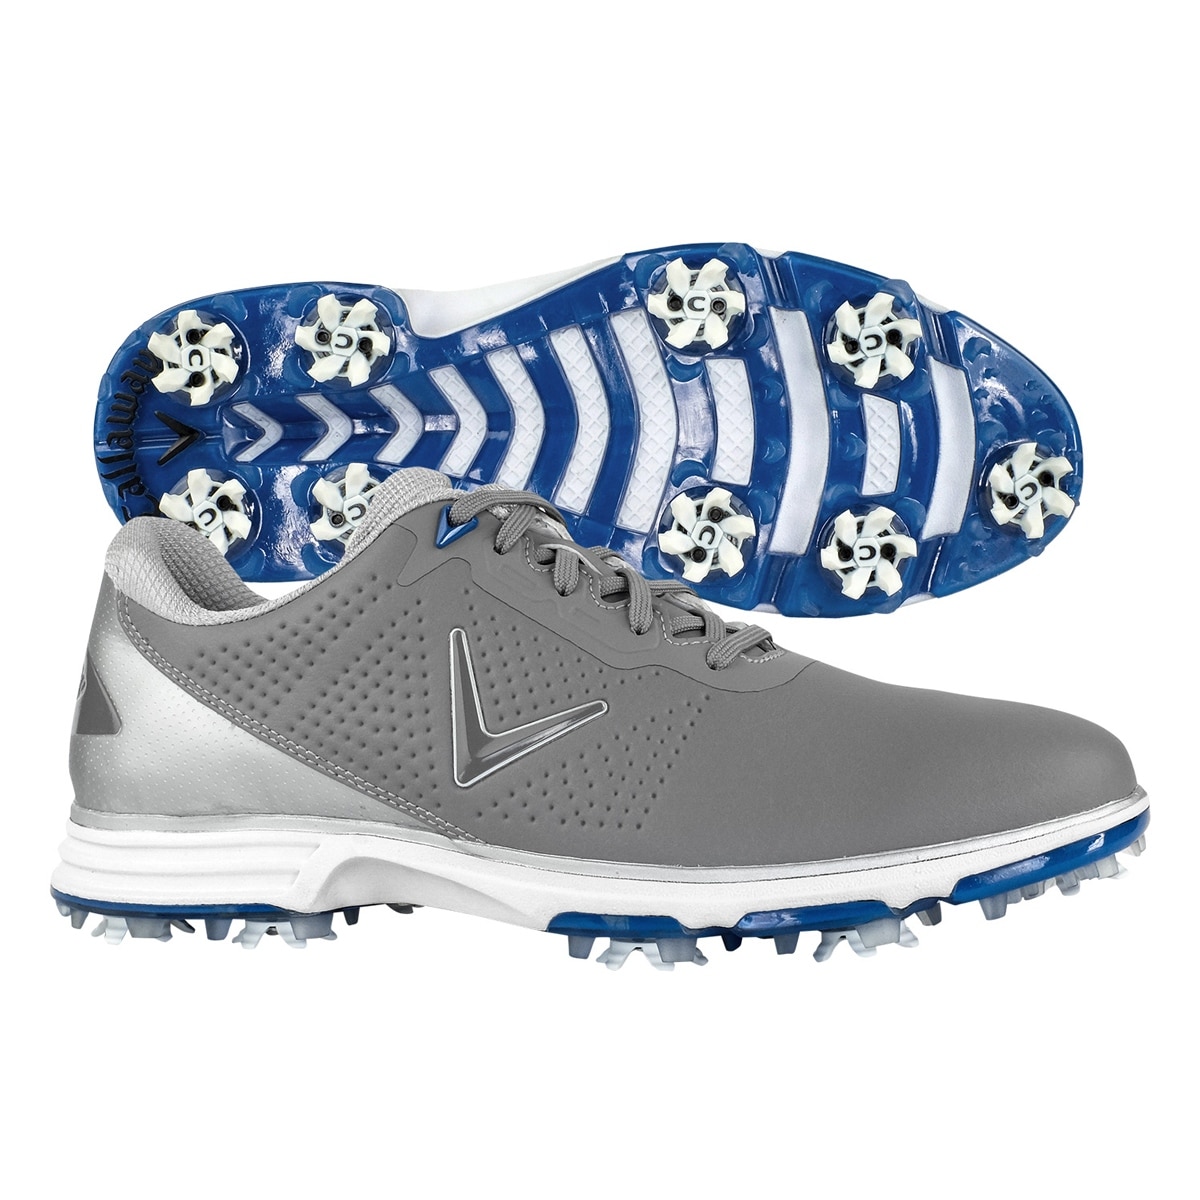 callaway men's coronado golf shoes